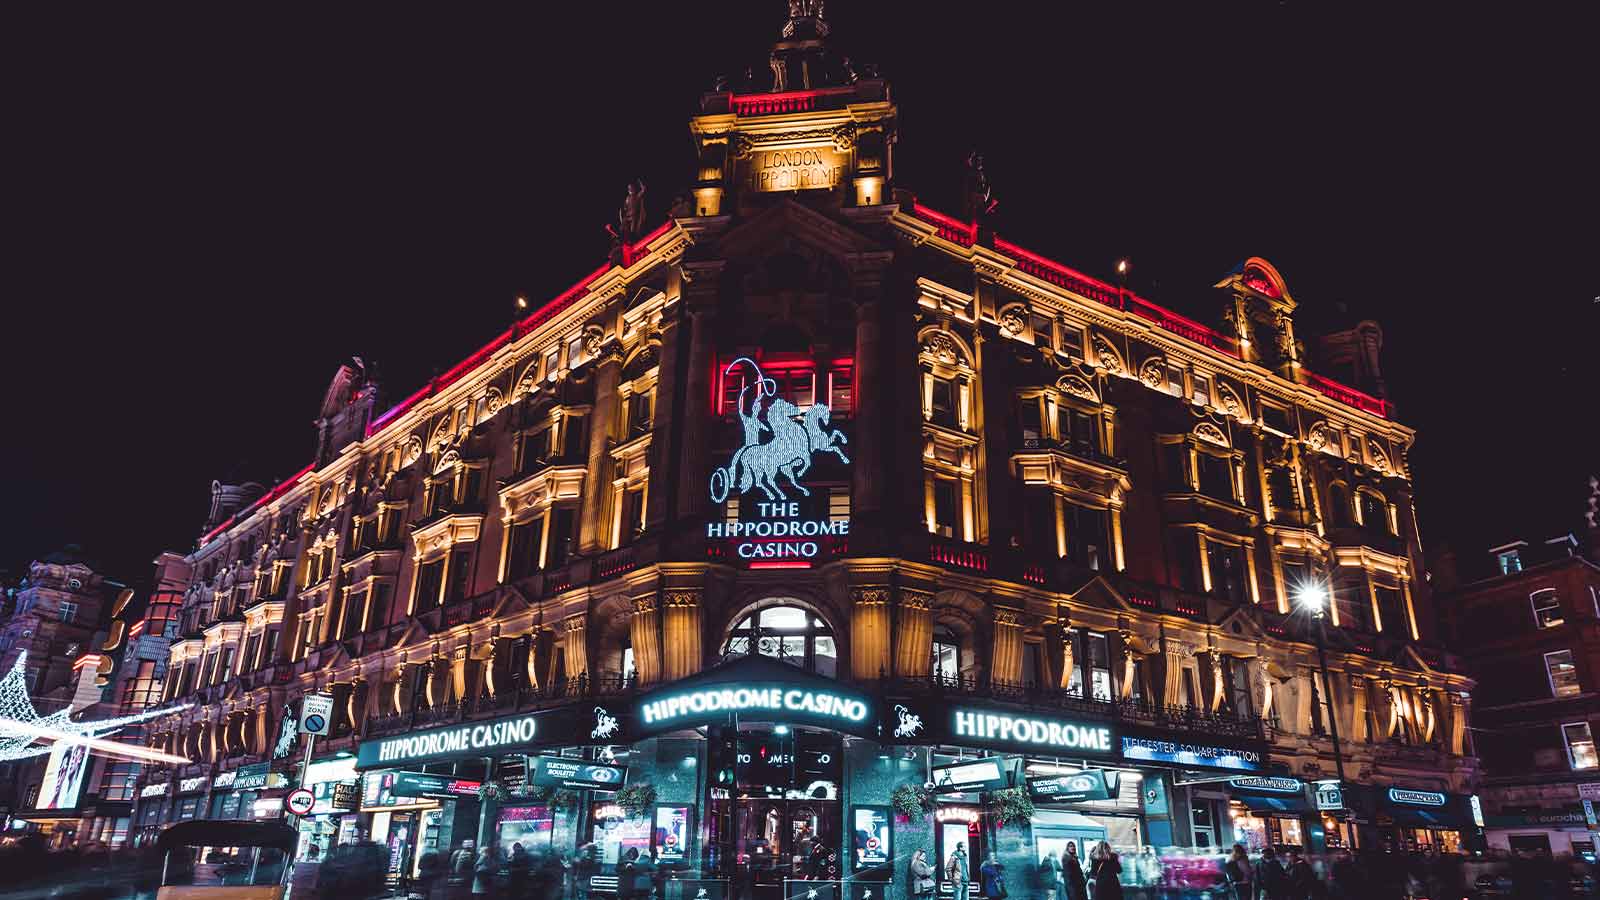 #1. The Hippodrome Casino – the best casino in London